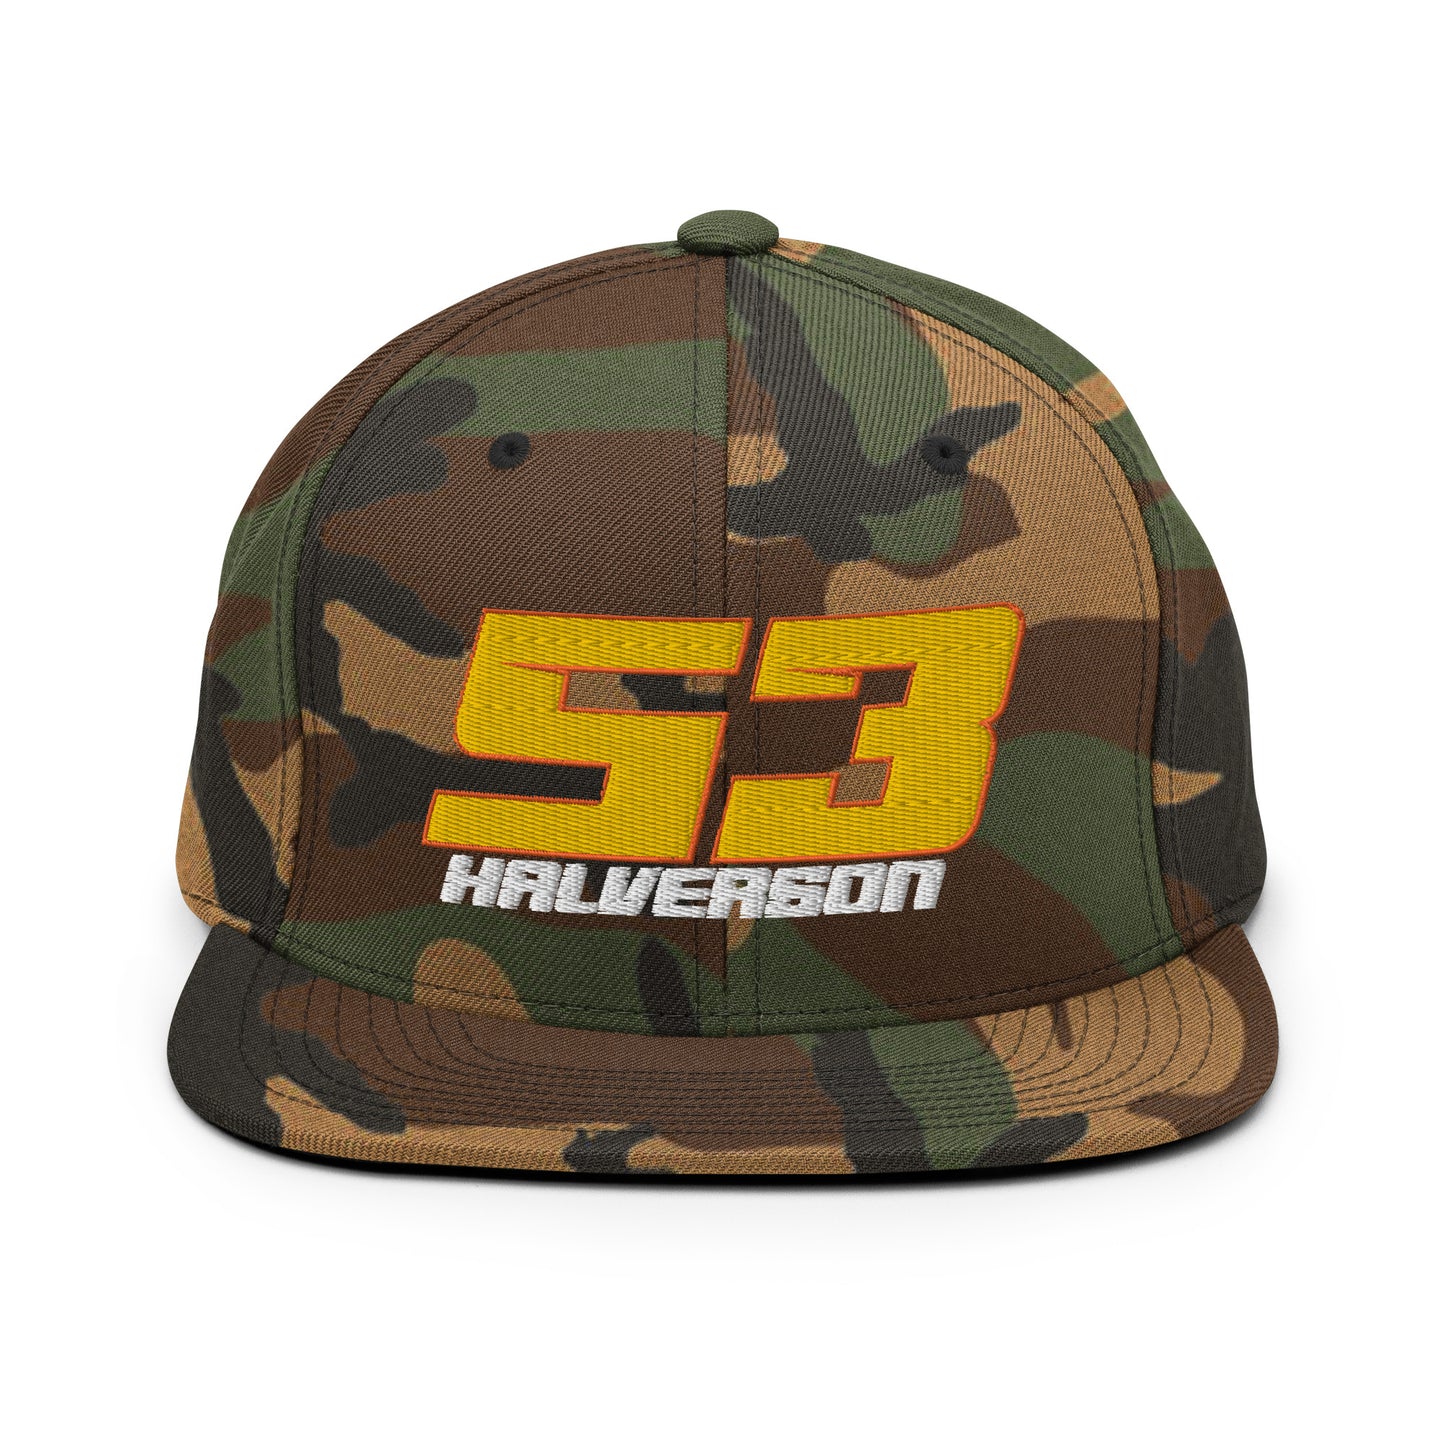 Ellis Halverson Snapback Hat